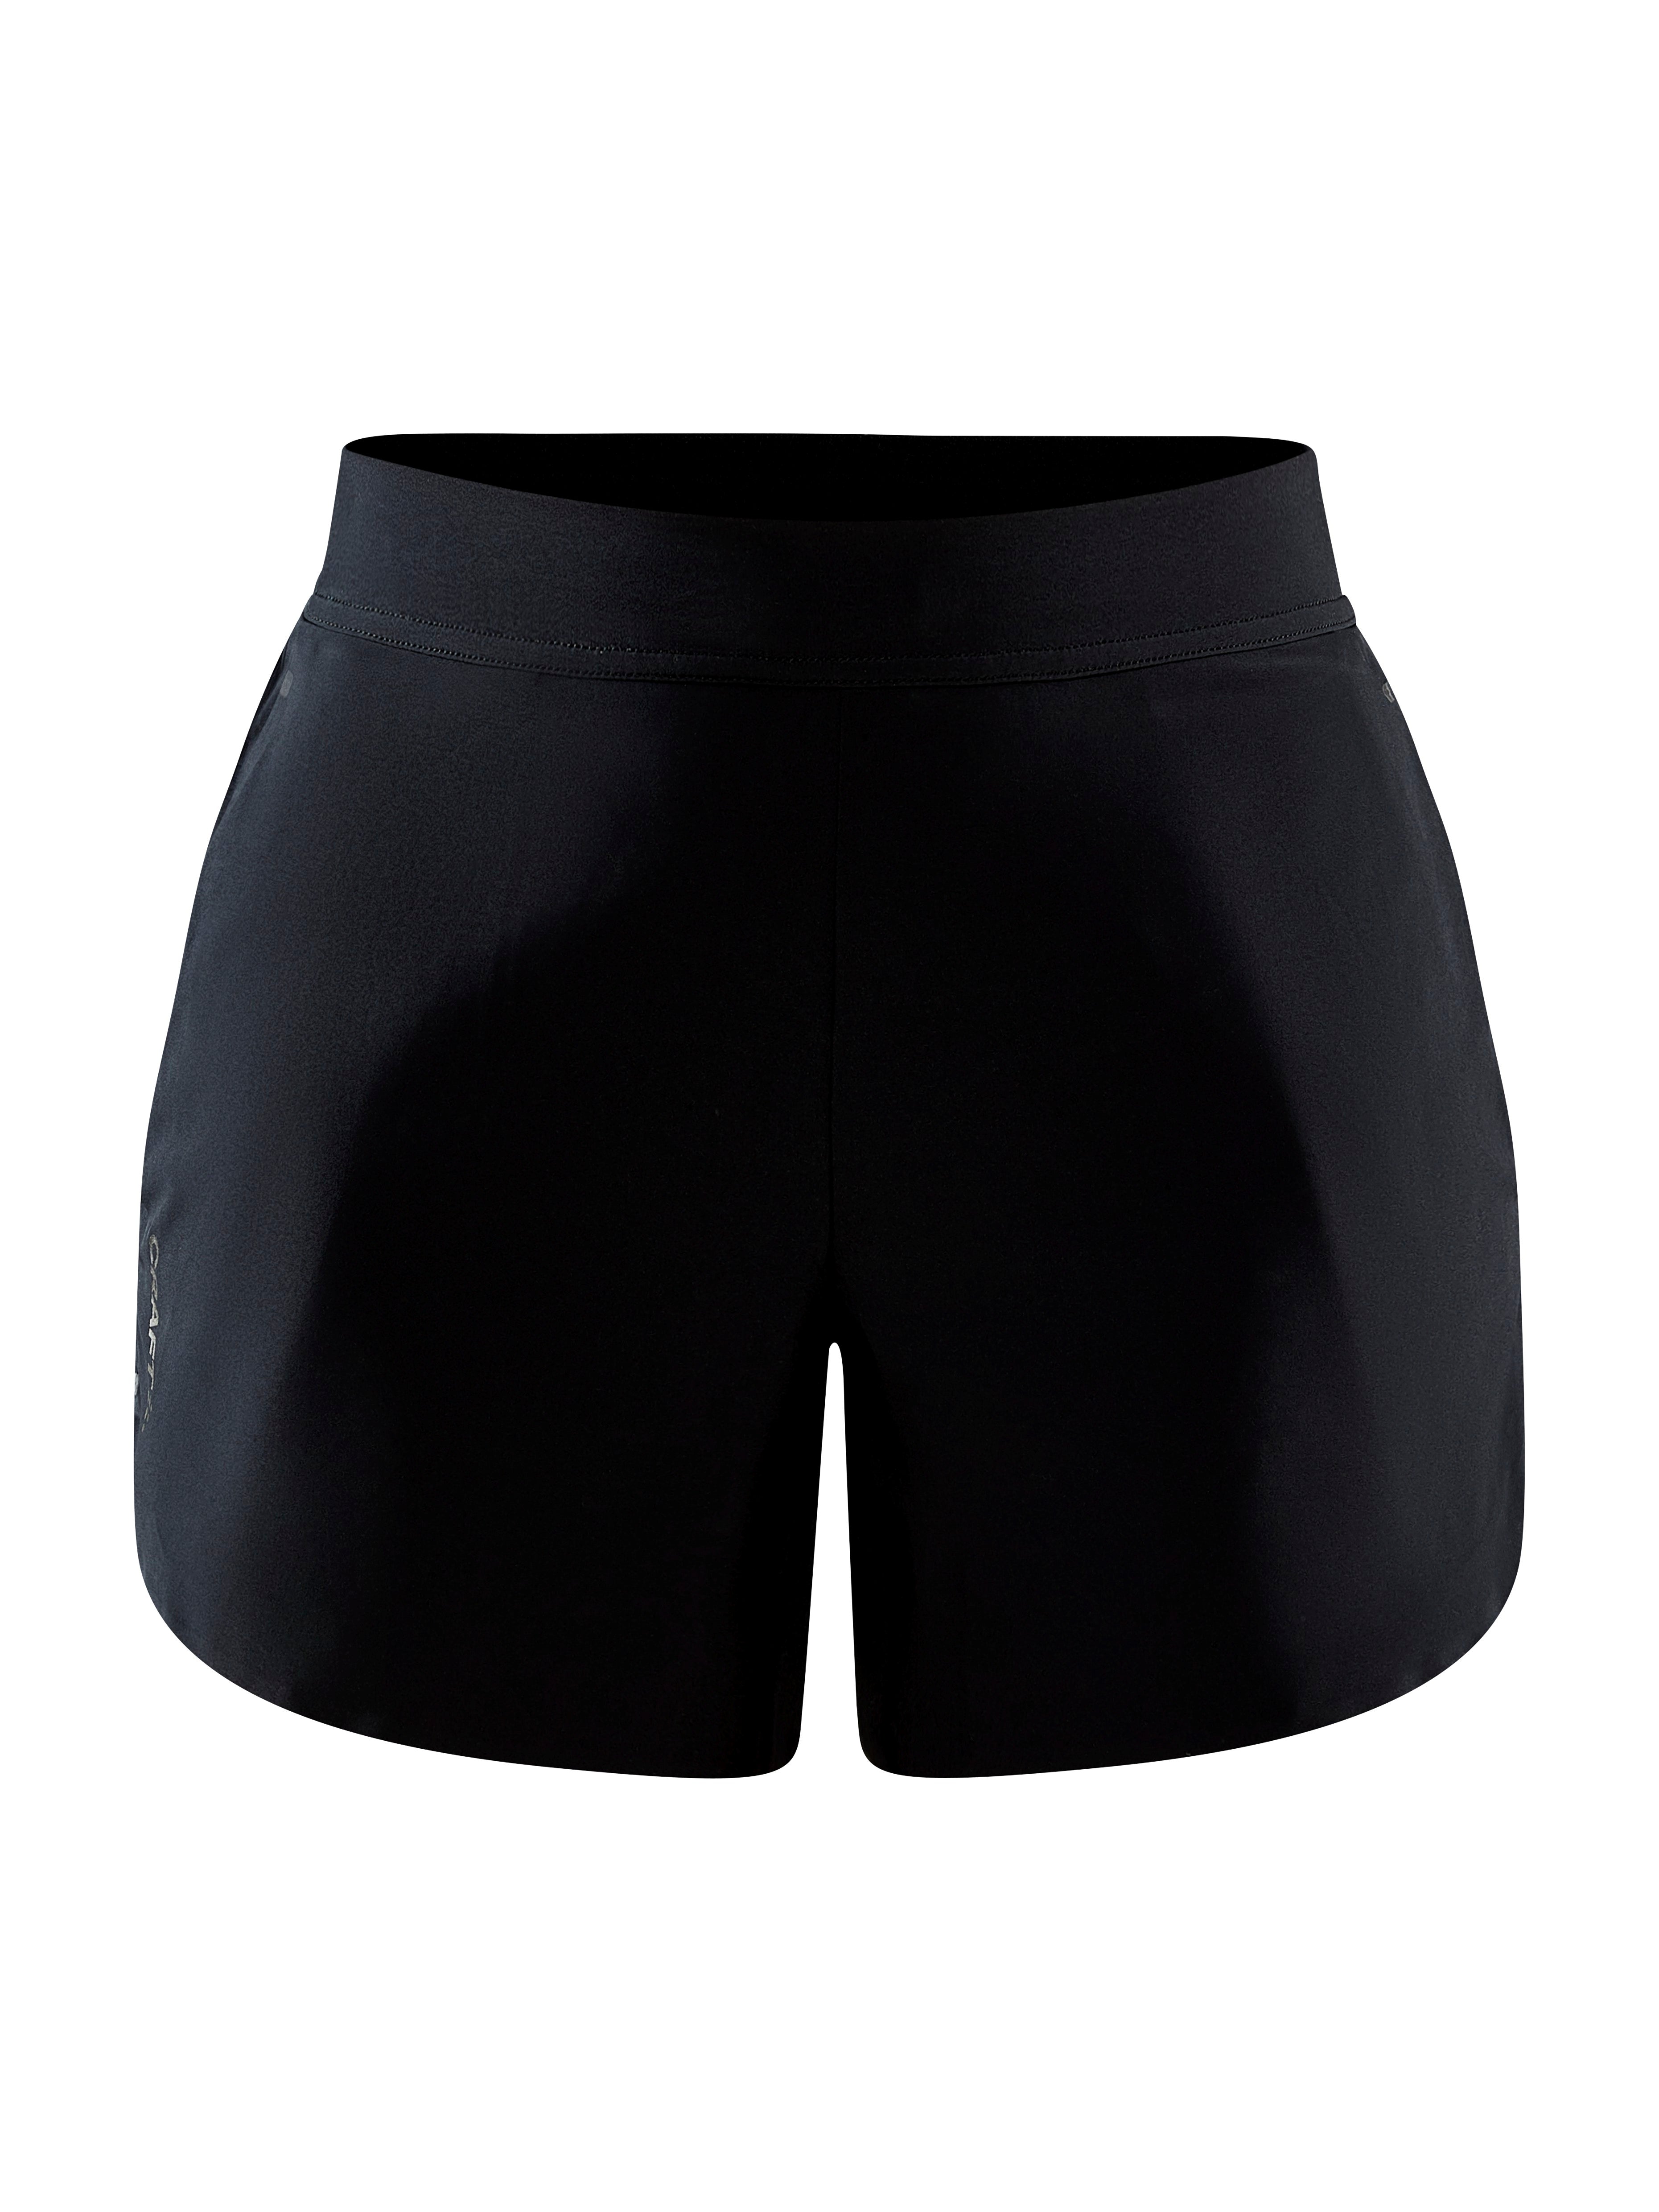 Superla Stretch Shorts  Soft surroundings pants, Stretch shorts